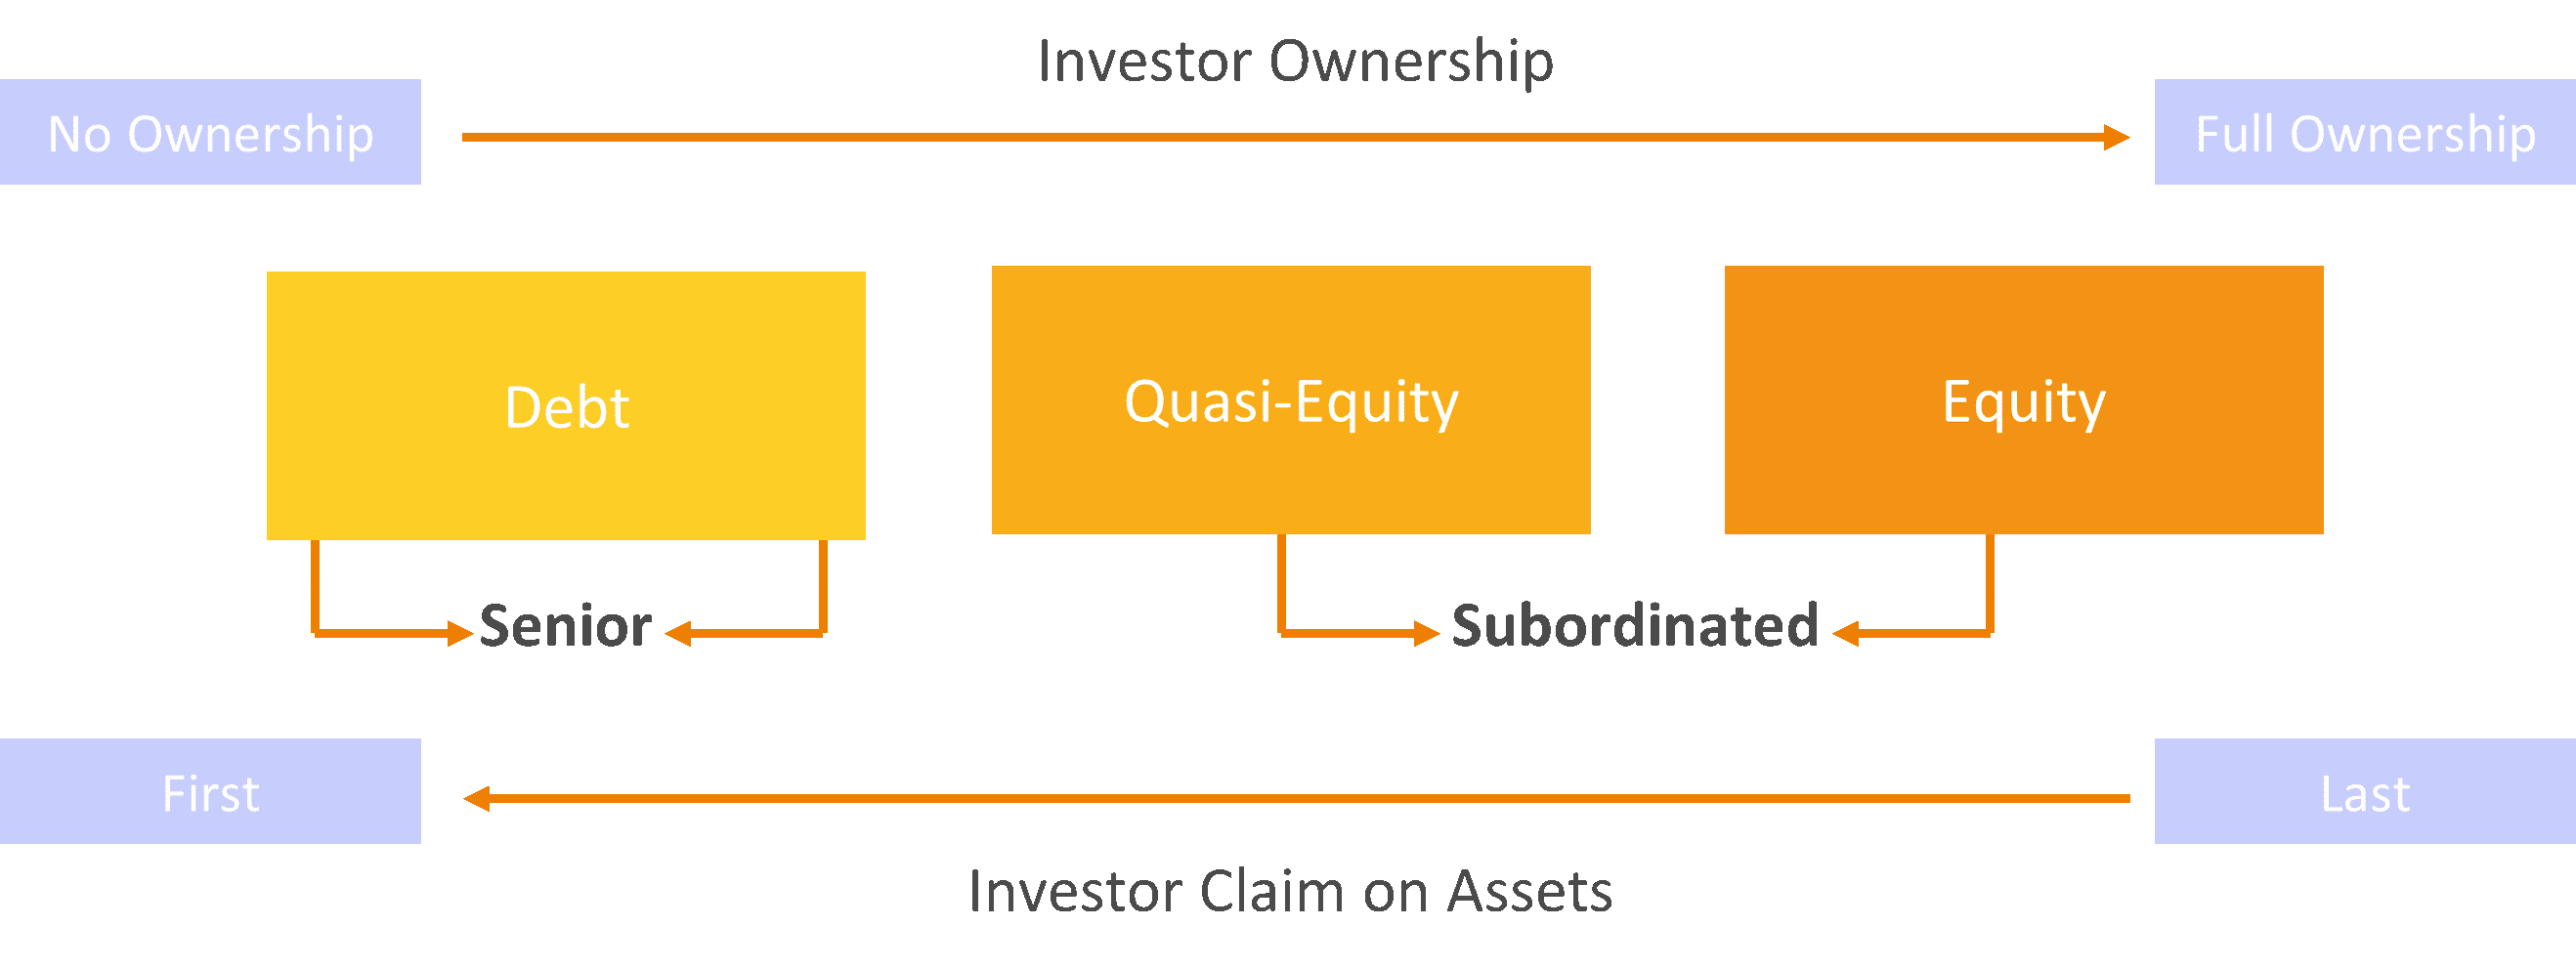 Investor ownership